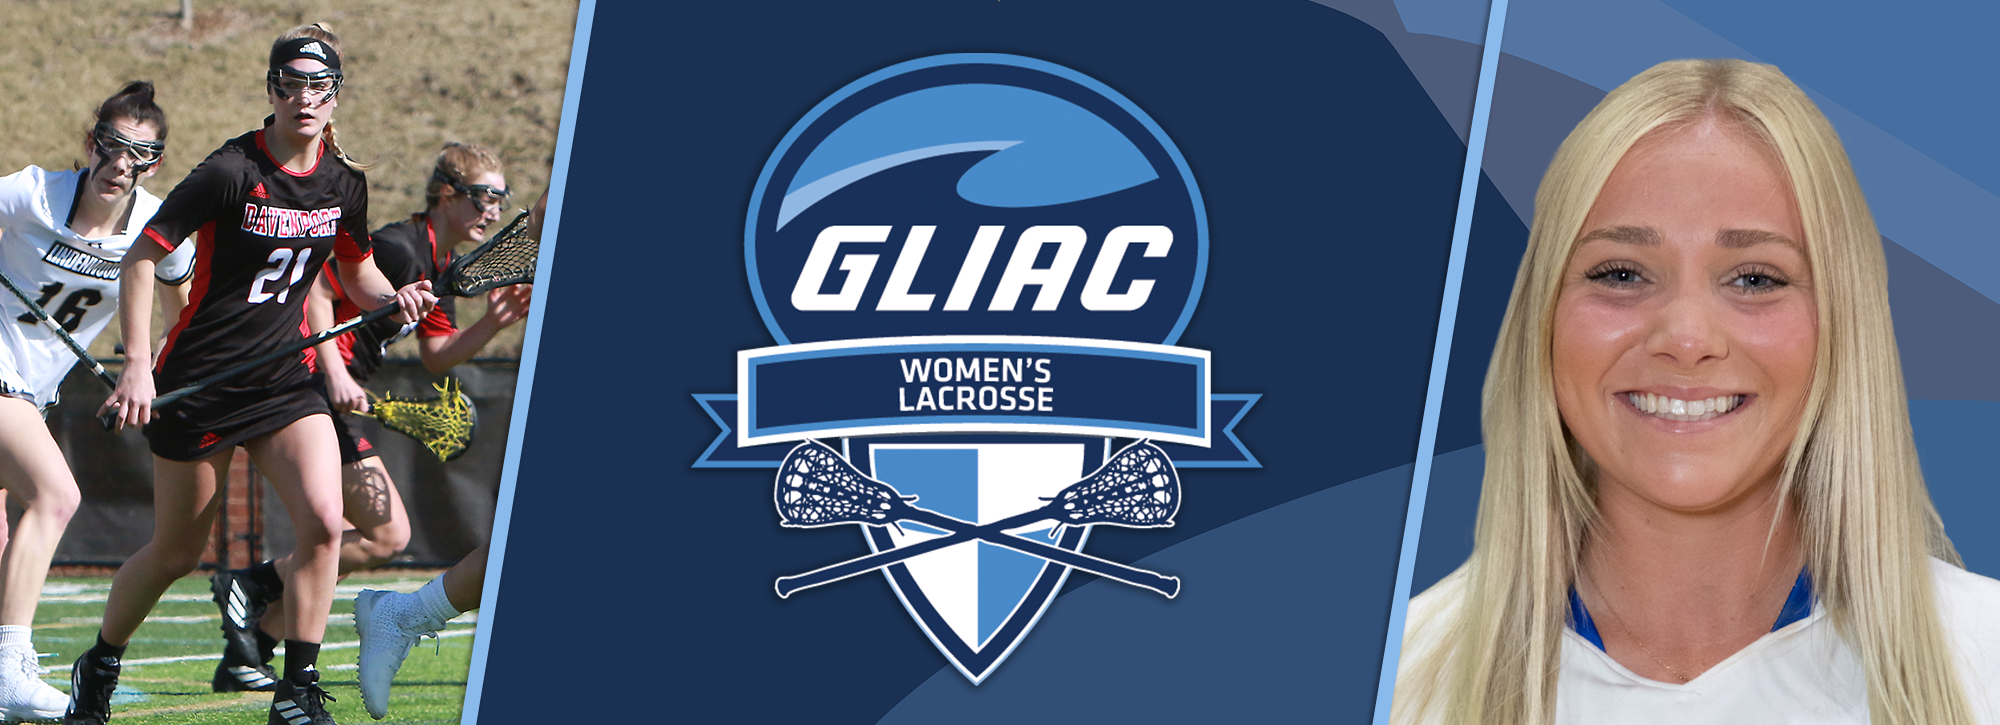 DU's Miller, GVSU's Gritter Claim Women's Lacrosse Weekly Honors